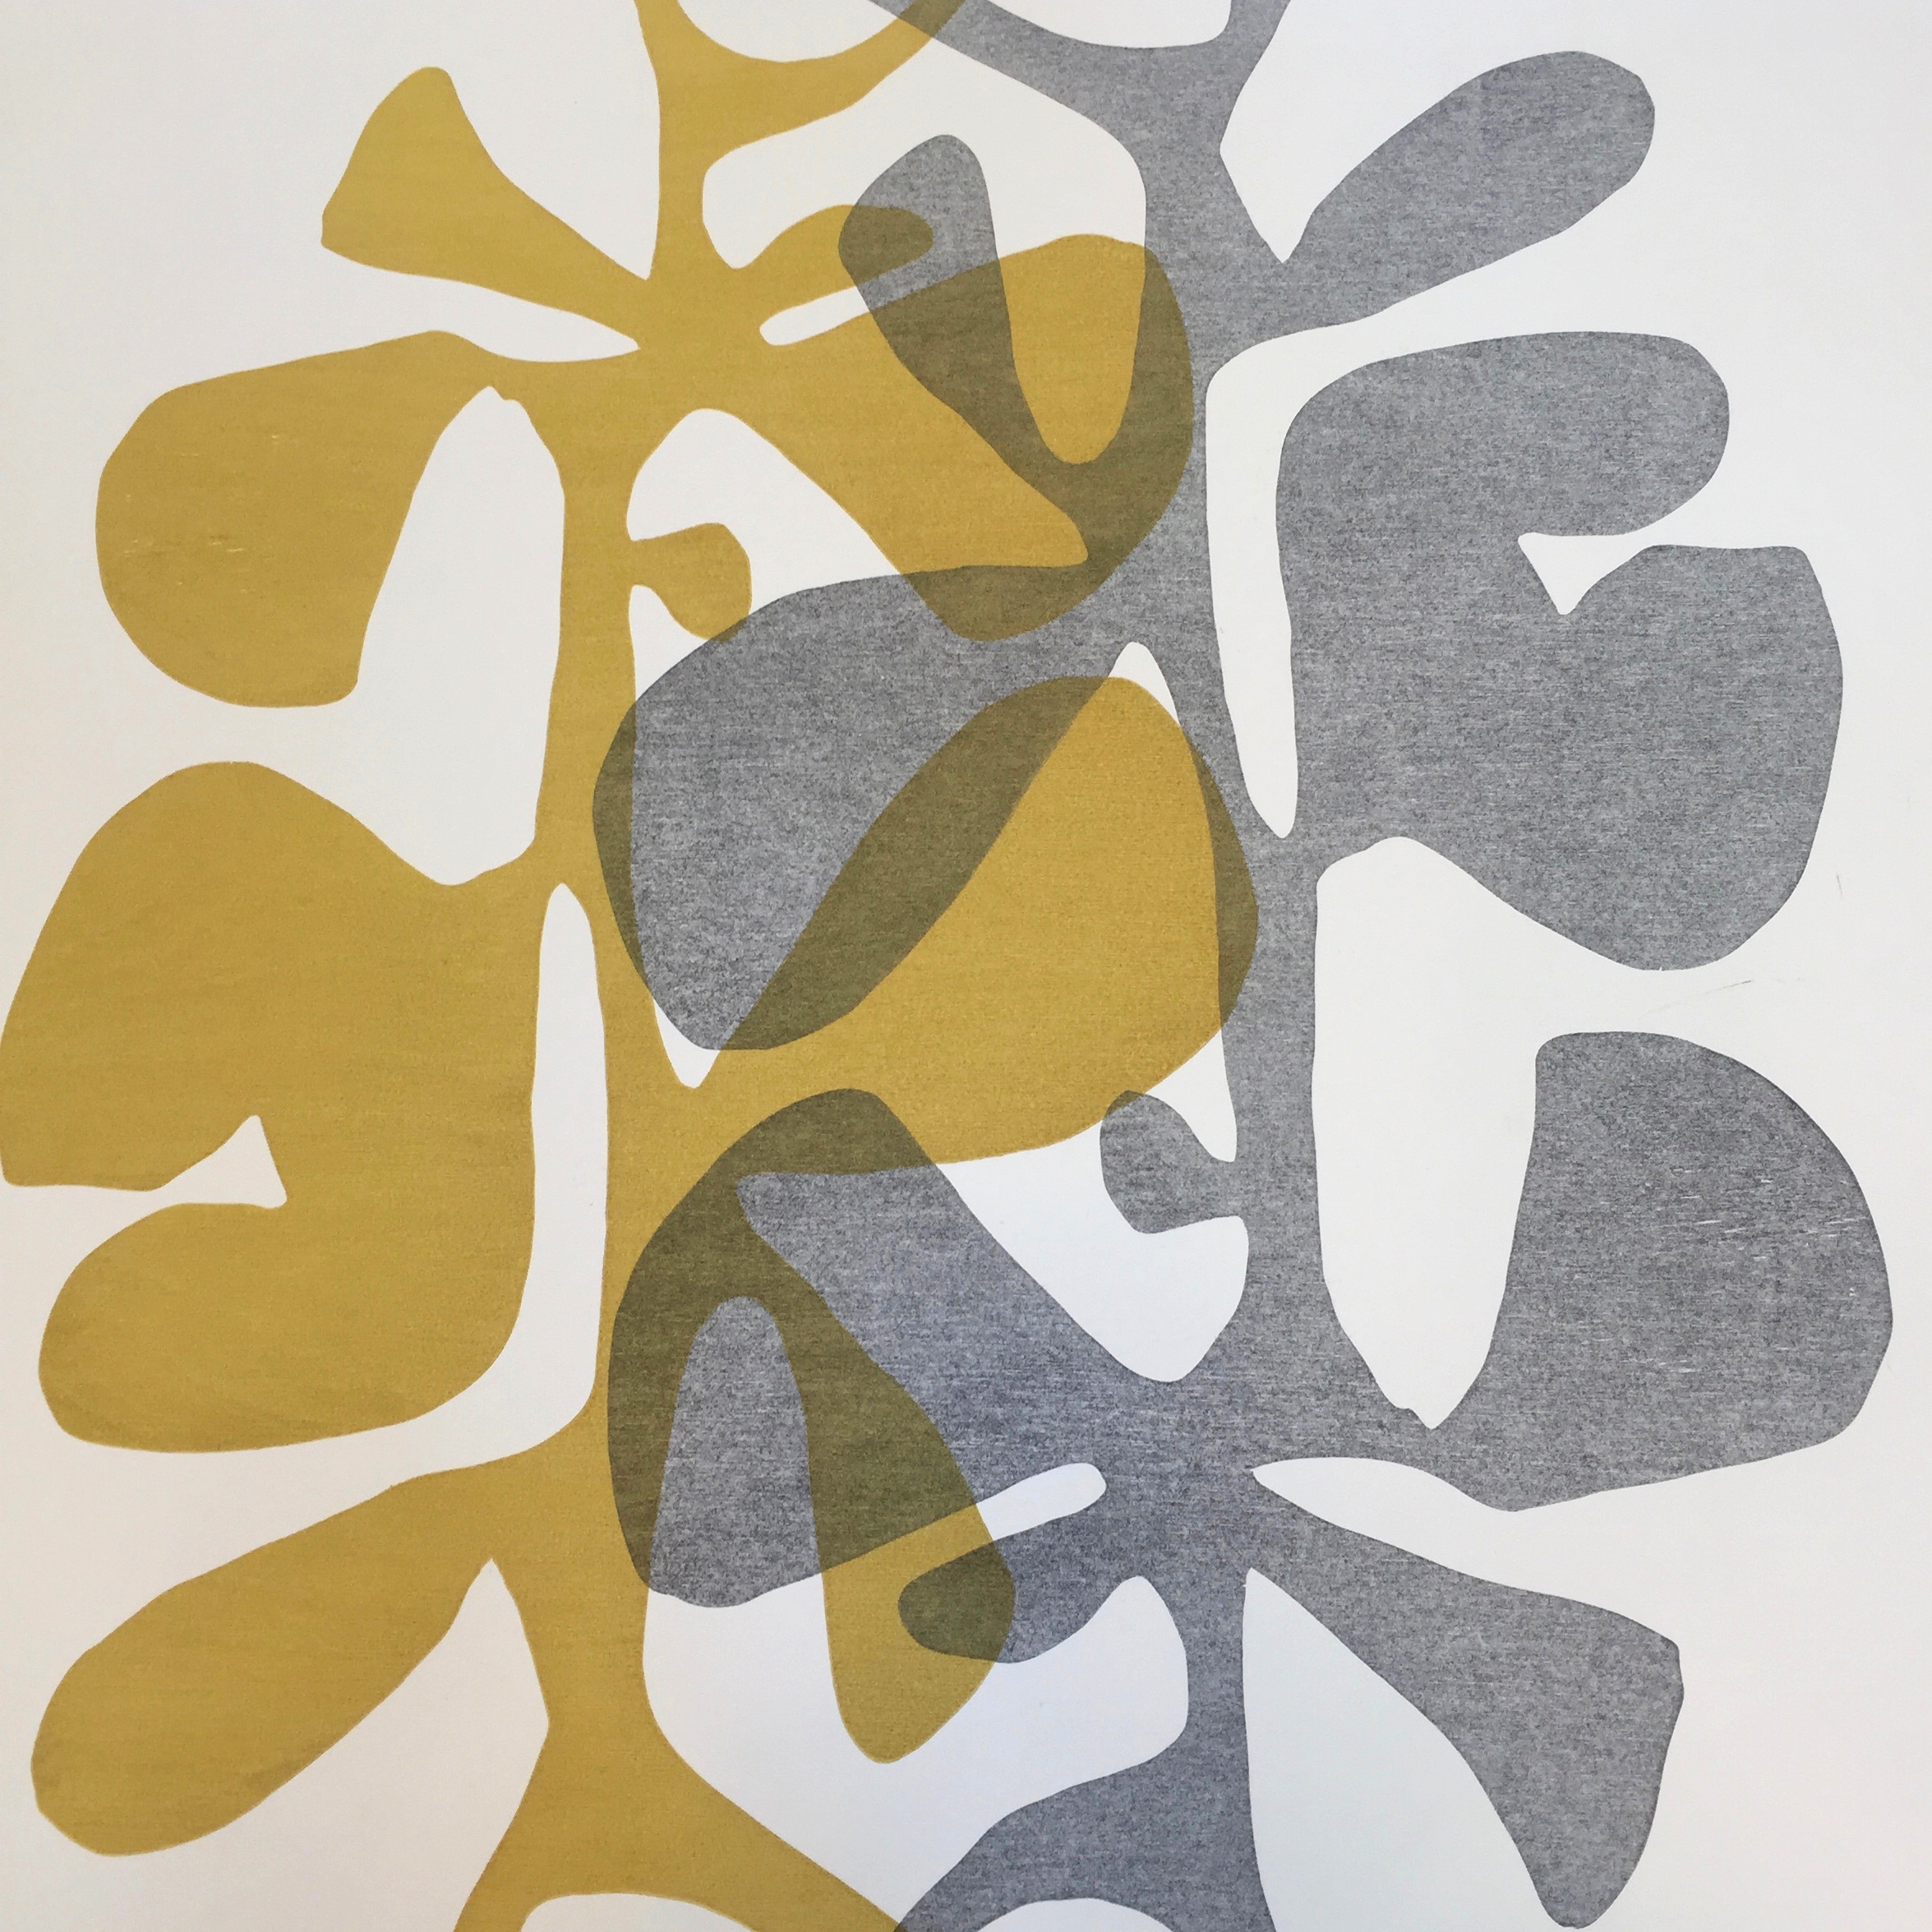 Bauhaus Botanical - Gold/Grey/Tan: created by Monica Monaghan-Milstein for MonicaArts Design LLC